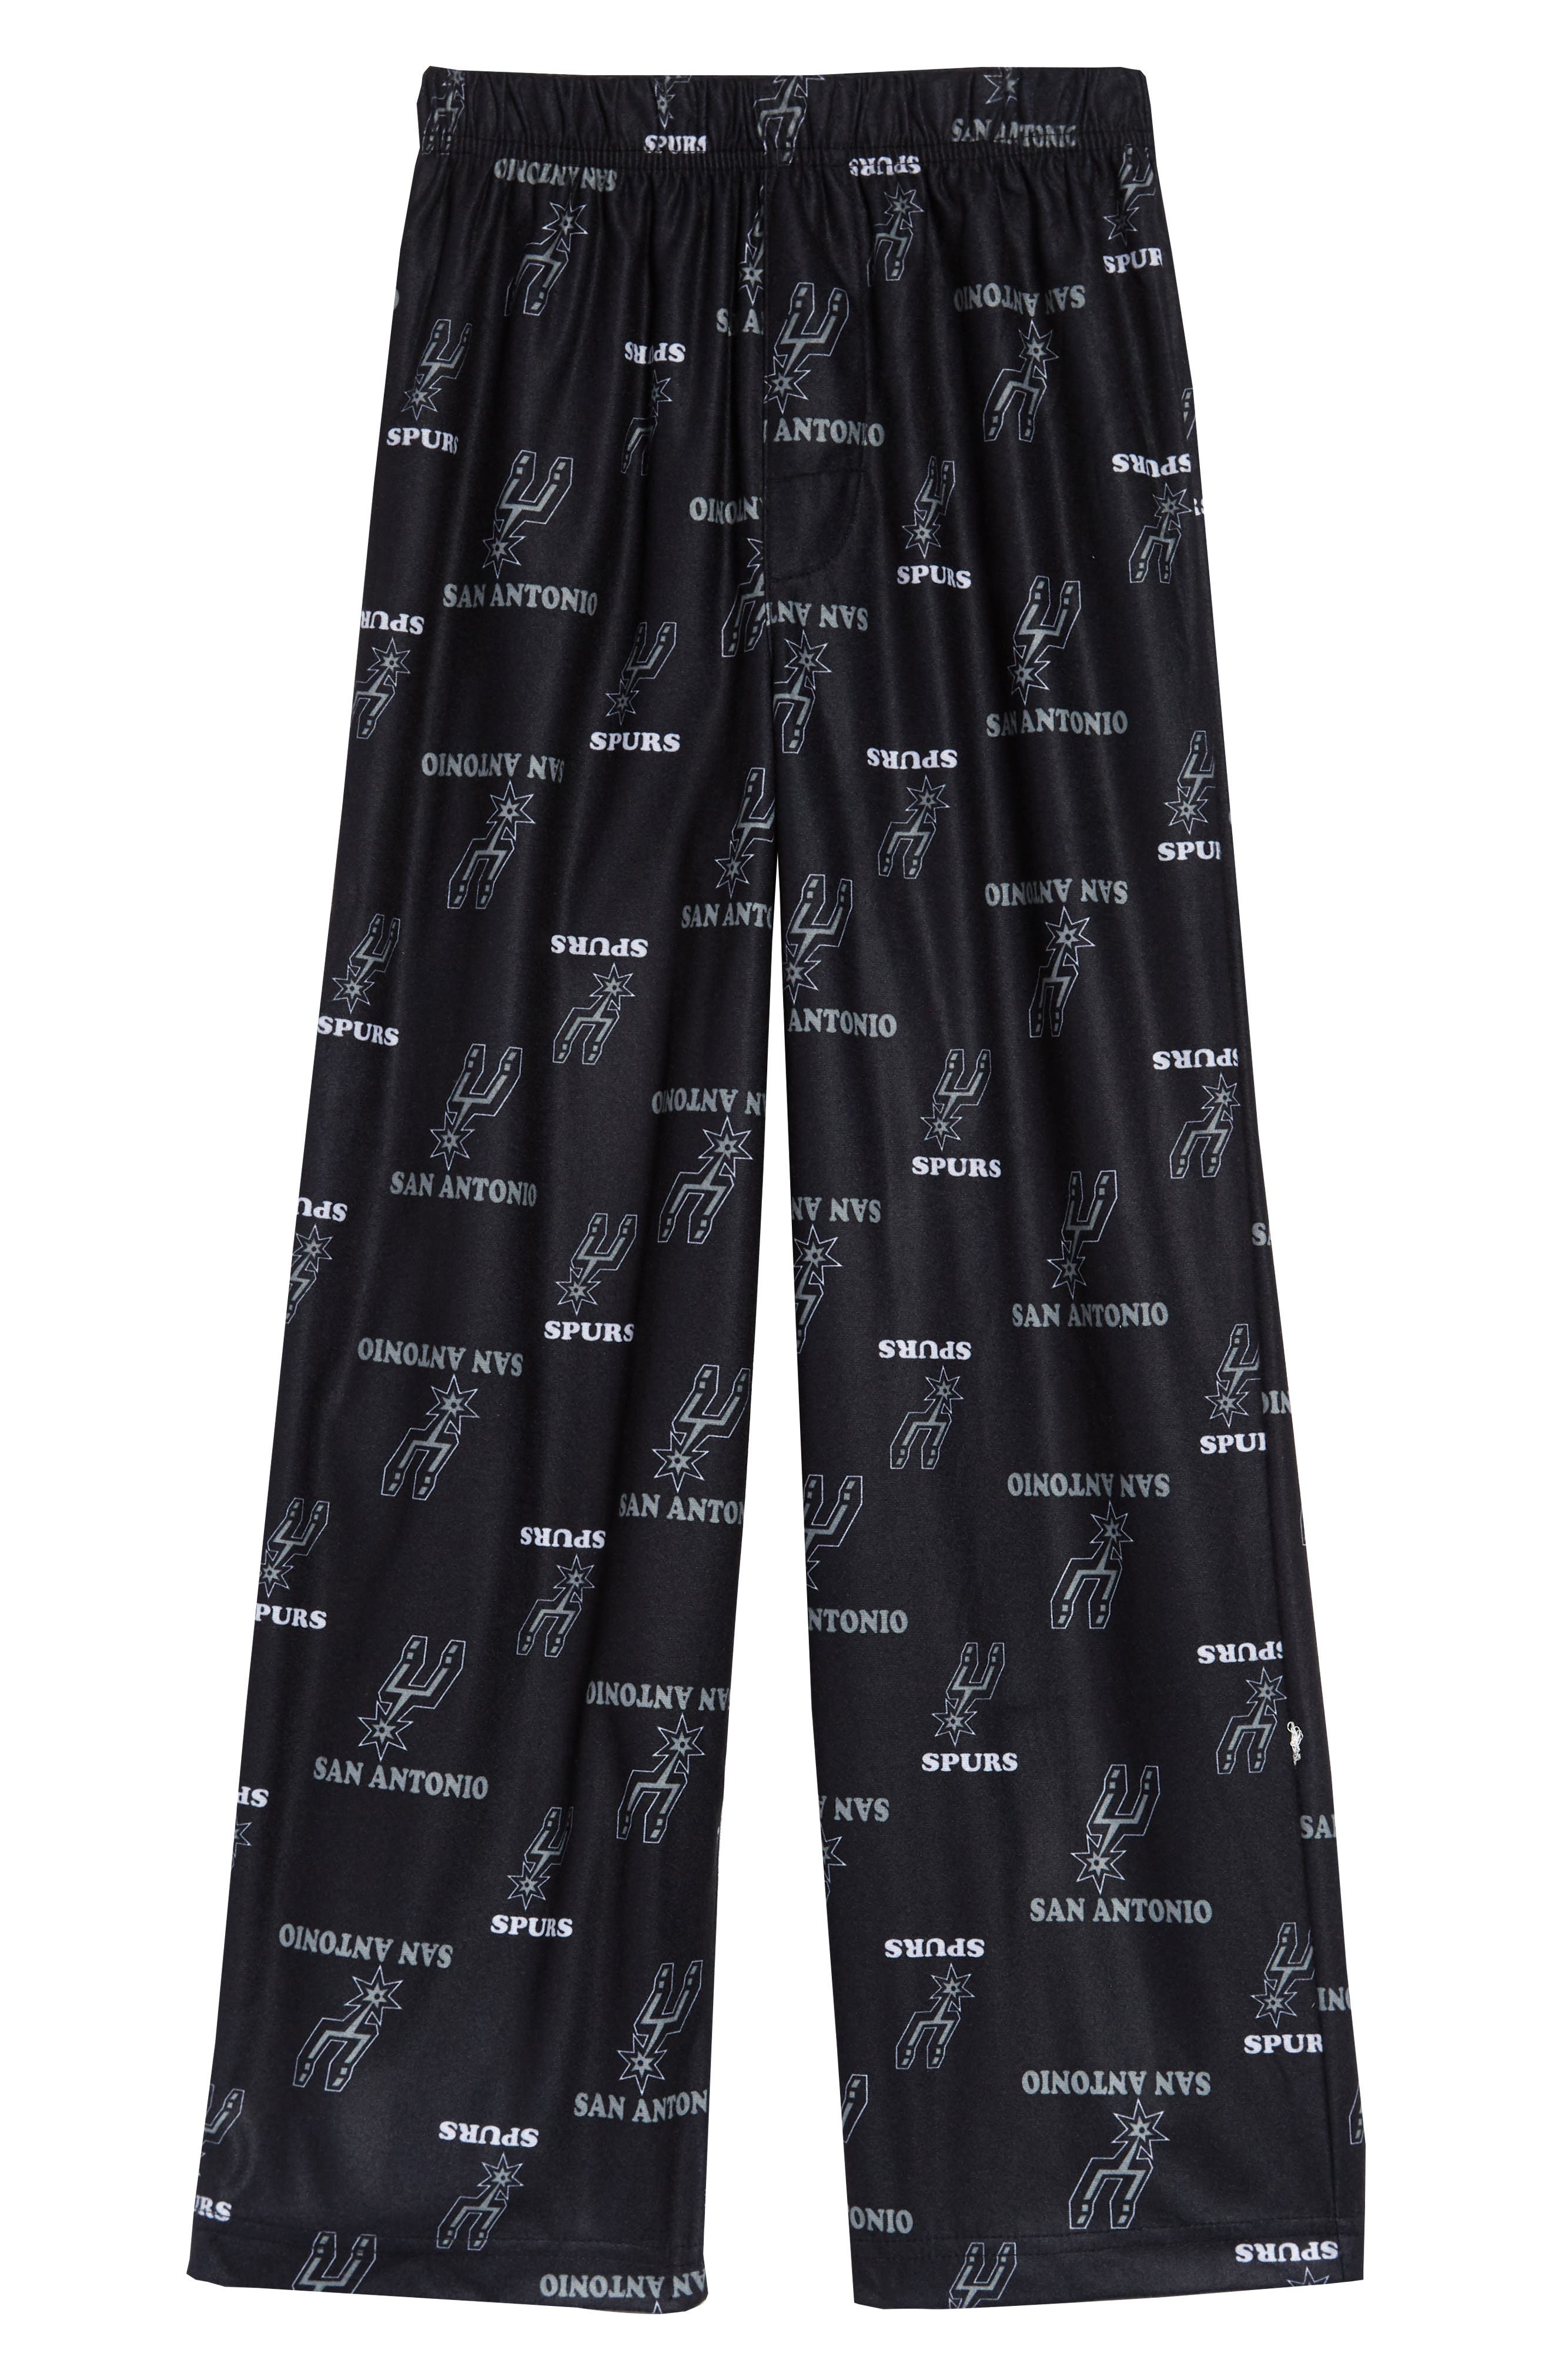 UPC 191496088273 product image for Boy's Nba Kids' Pajama Pants, Size S - Black | upcitemdb.com